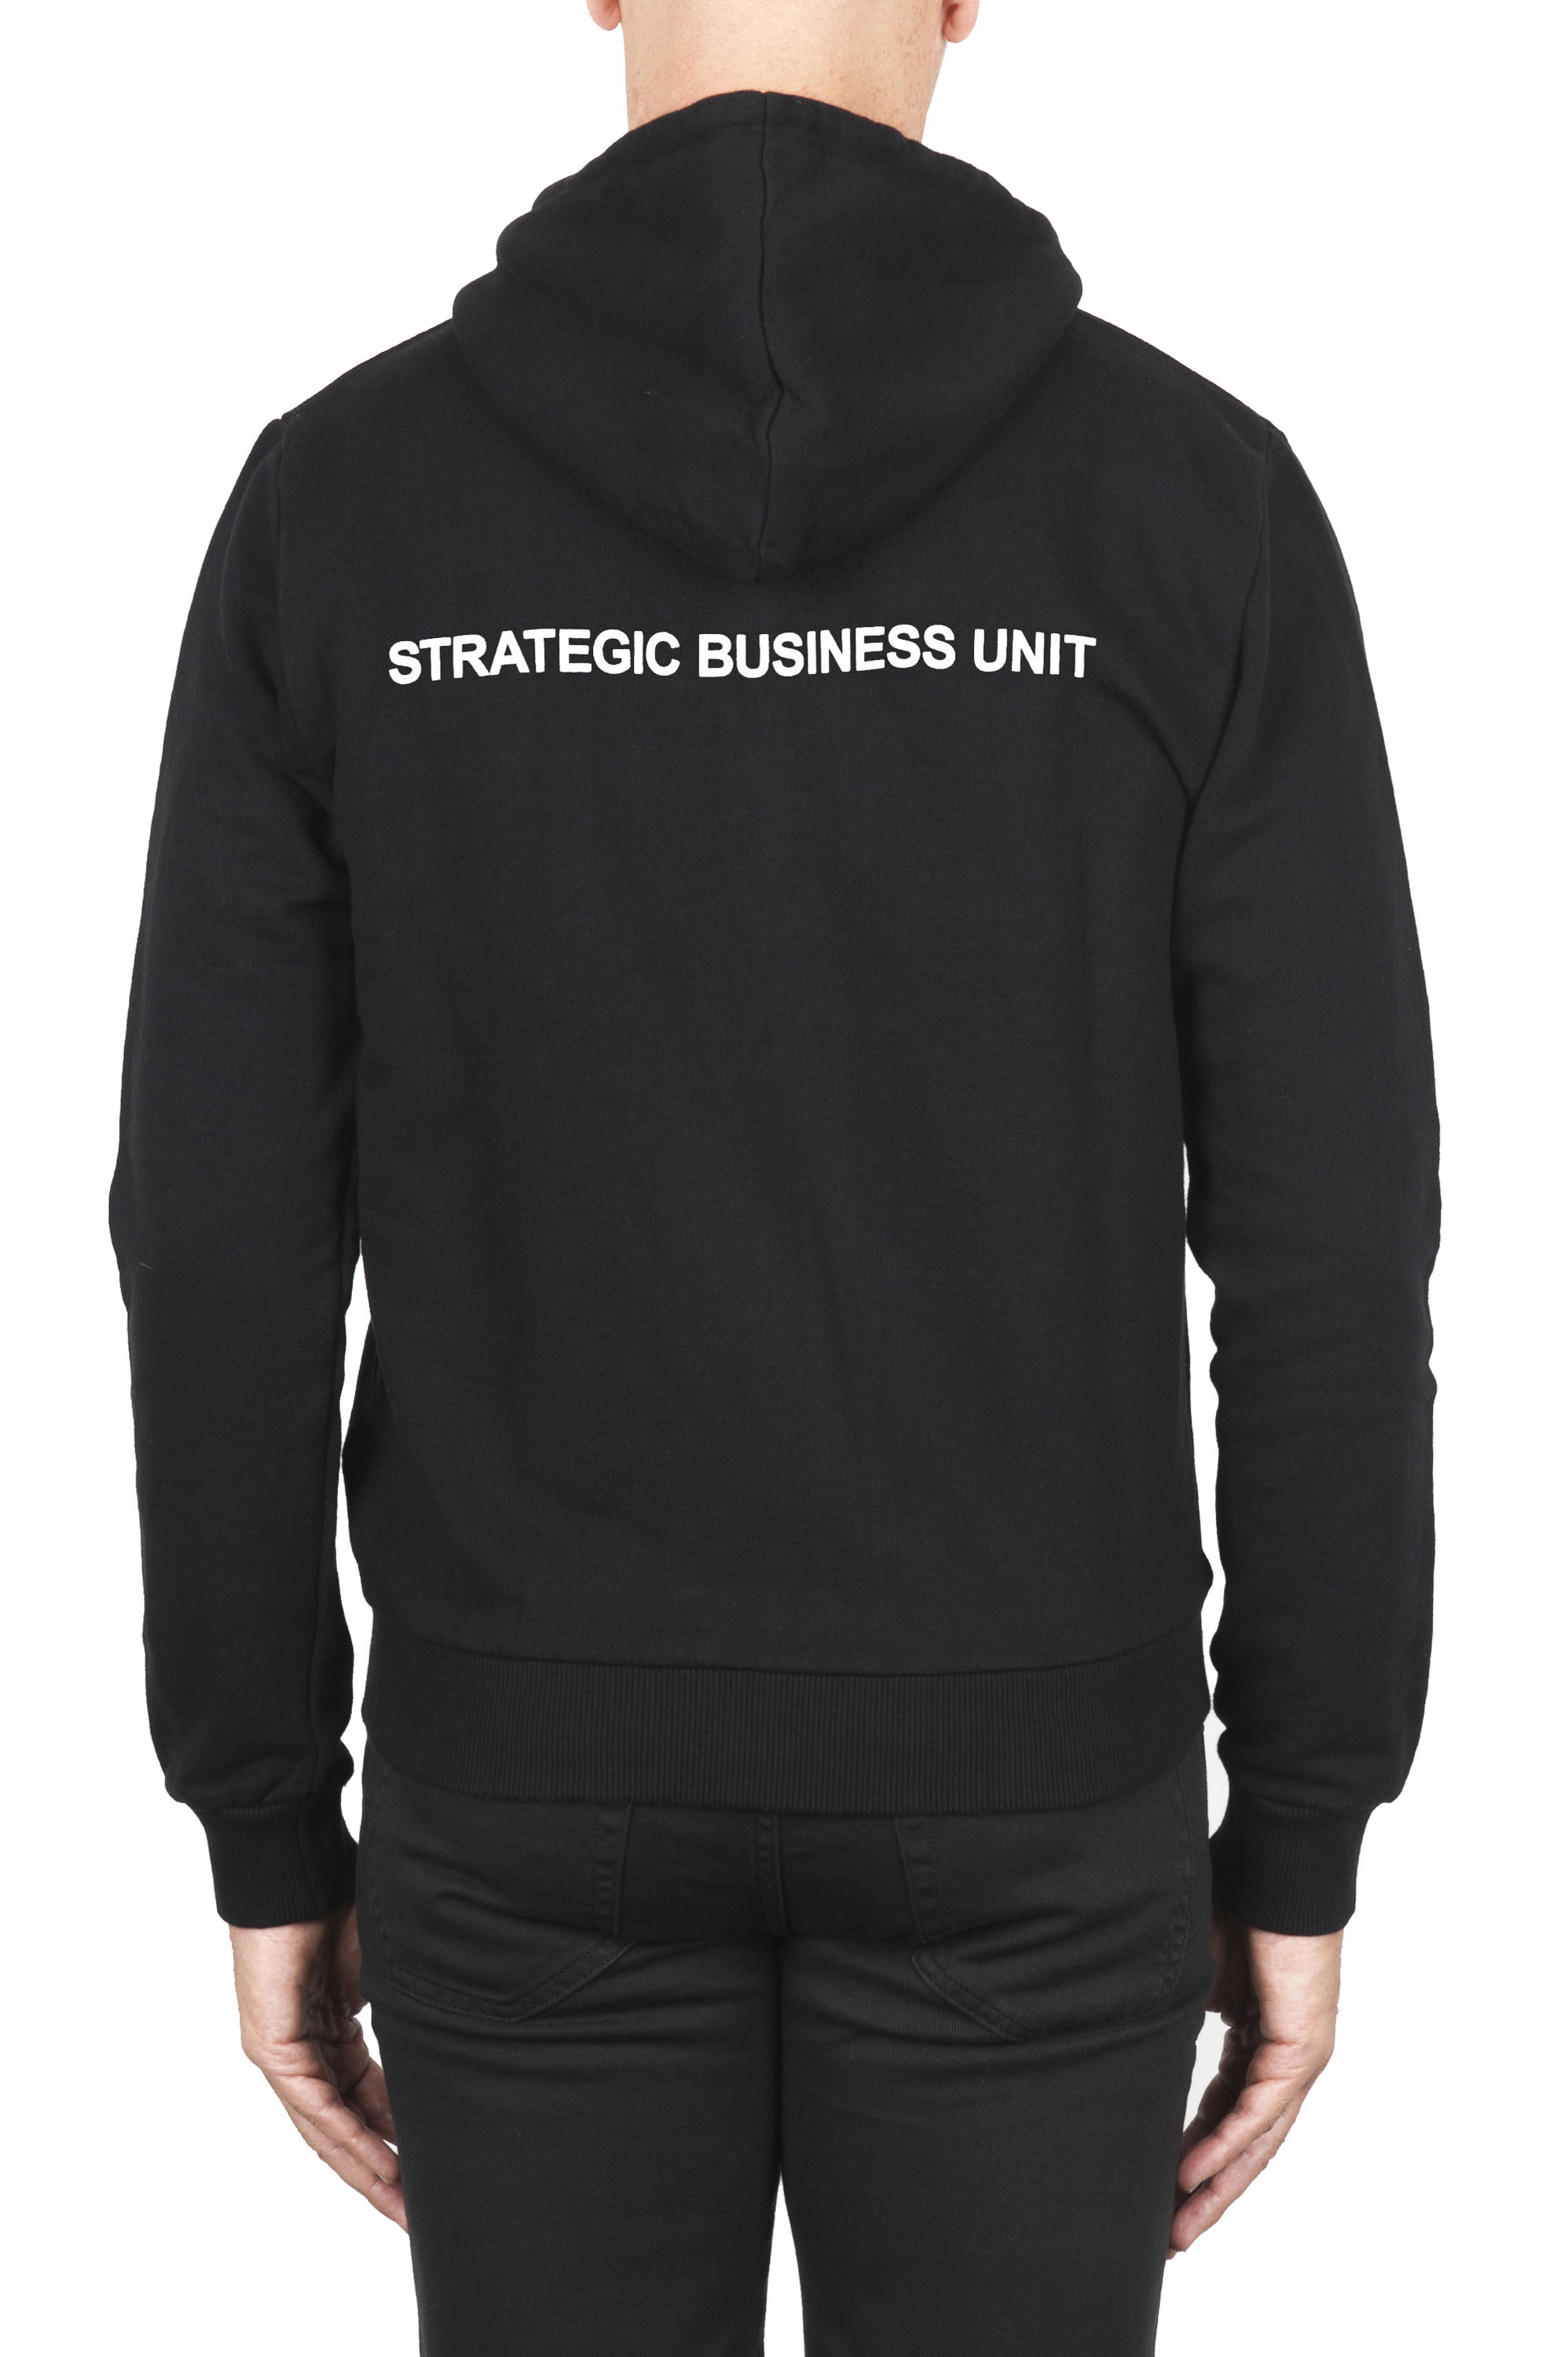 SBU 04115_2023SS Hooded black sweatshirt printed with SBU logo 01